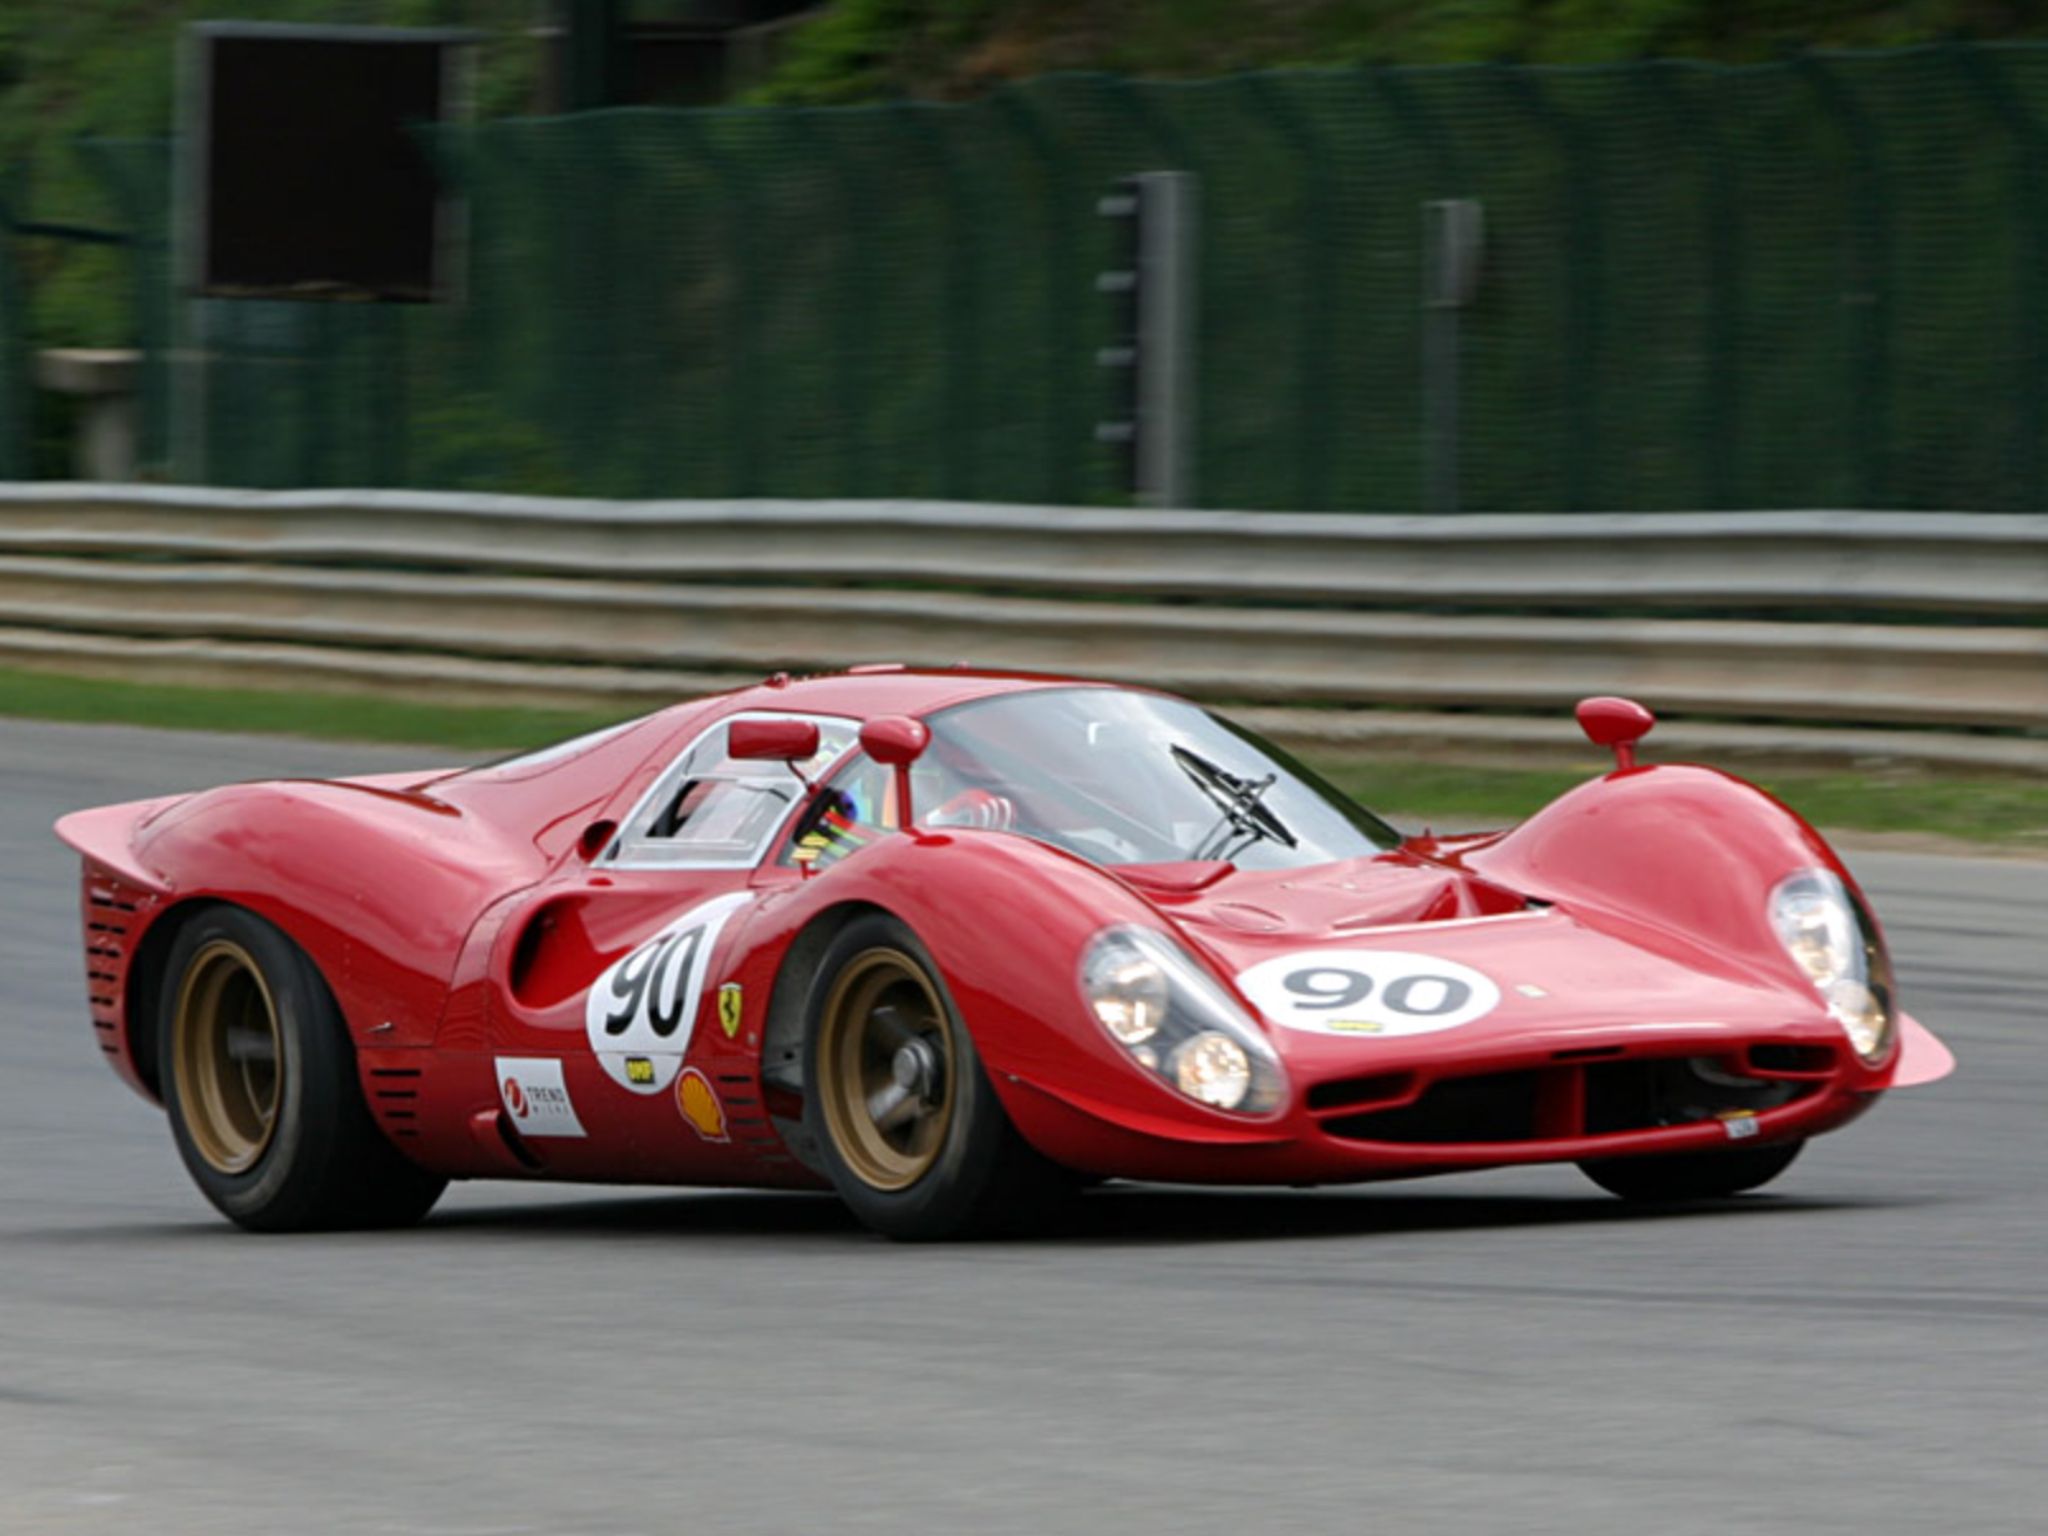 Ferrari 330 p3. Ferrari, Racing, Super cars